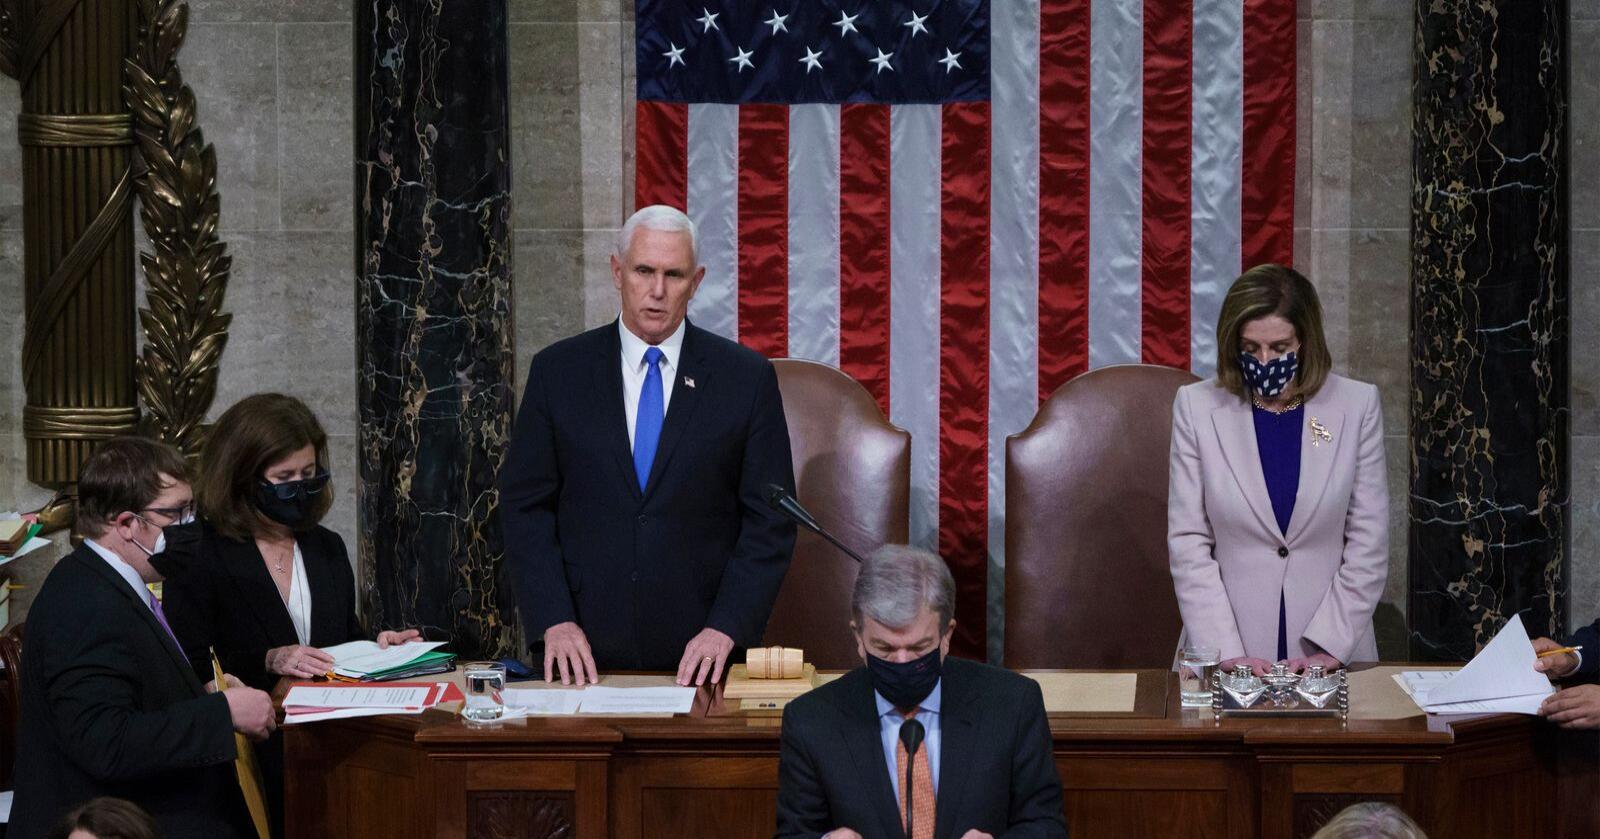 I livsfare: Granskningskomiteen slår fast at tidligere visepresident Mike Pence var i livsfare 6. januar i fjor. Foto: J. Scott Applewhite / AP / NTB